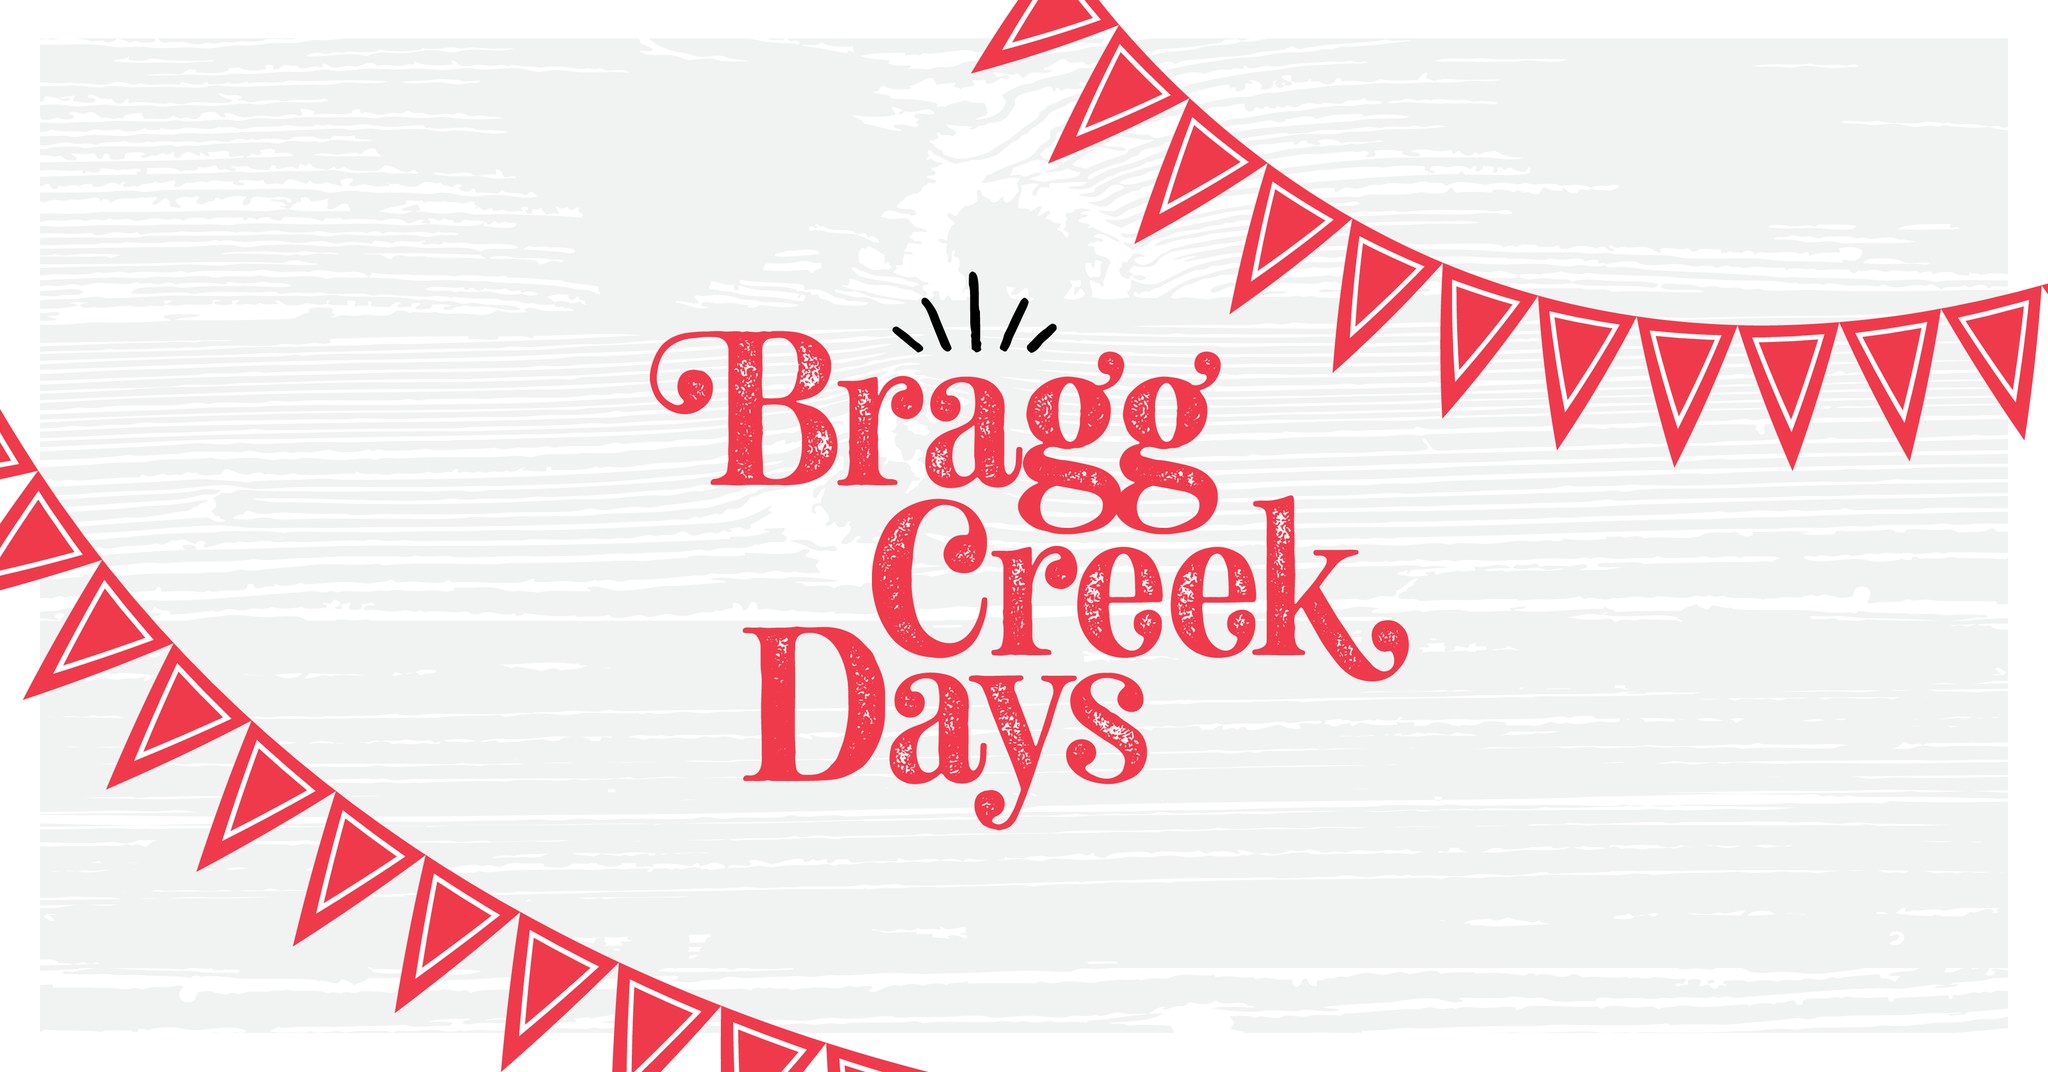 Bragg Creek Days on Where Rockies